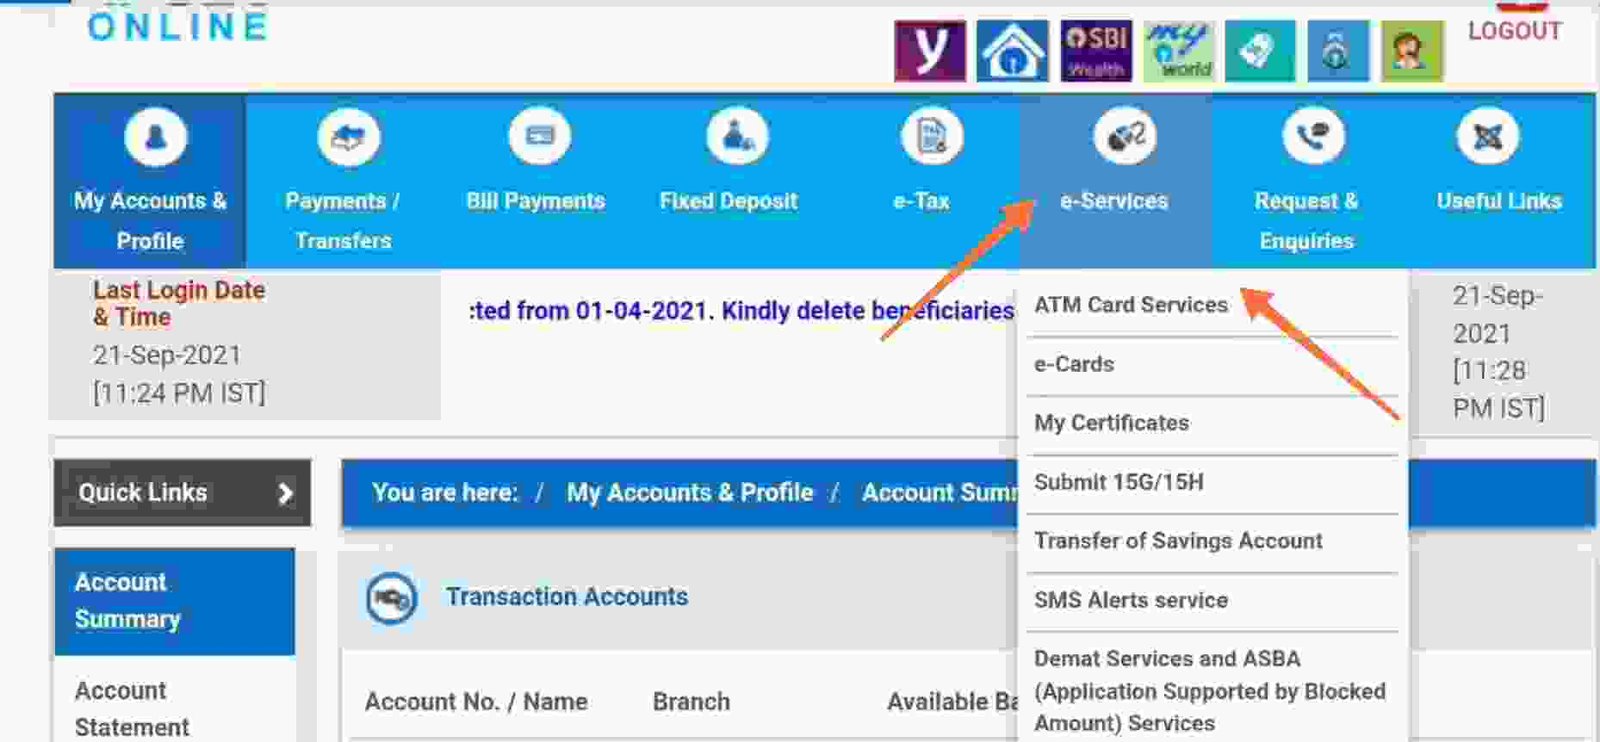 SBI ATM Card Apply Online